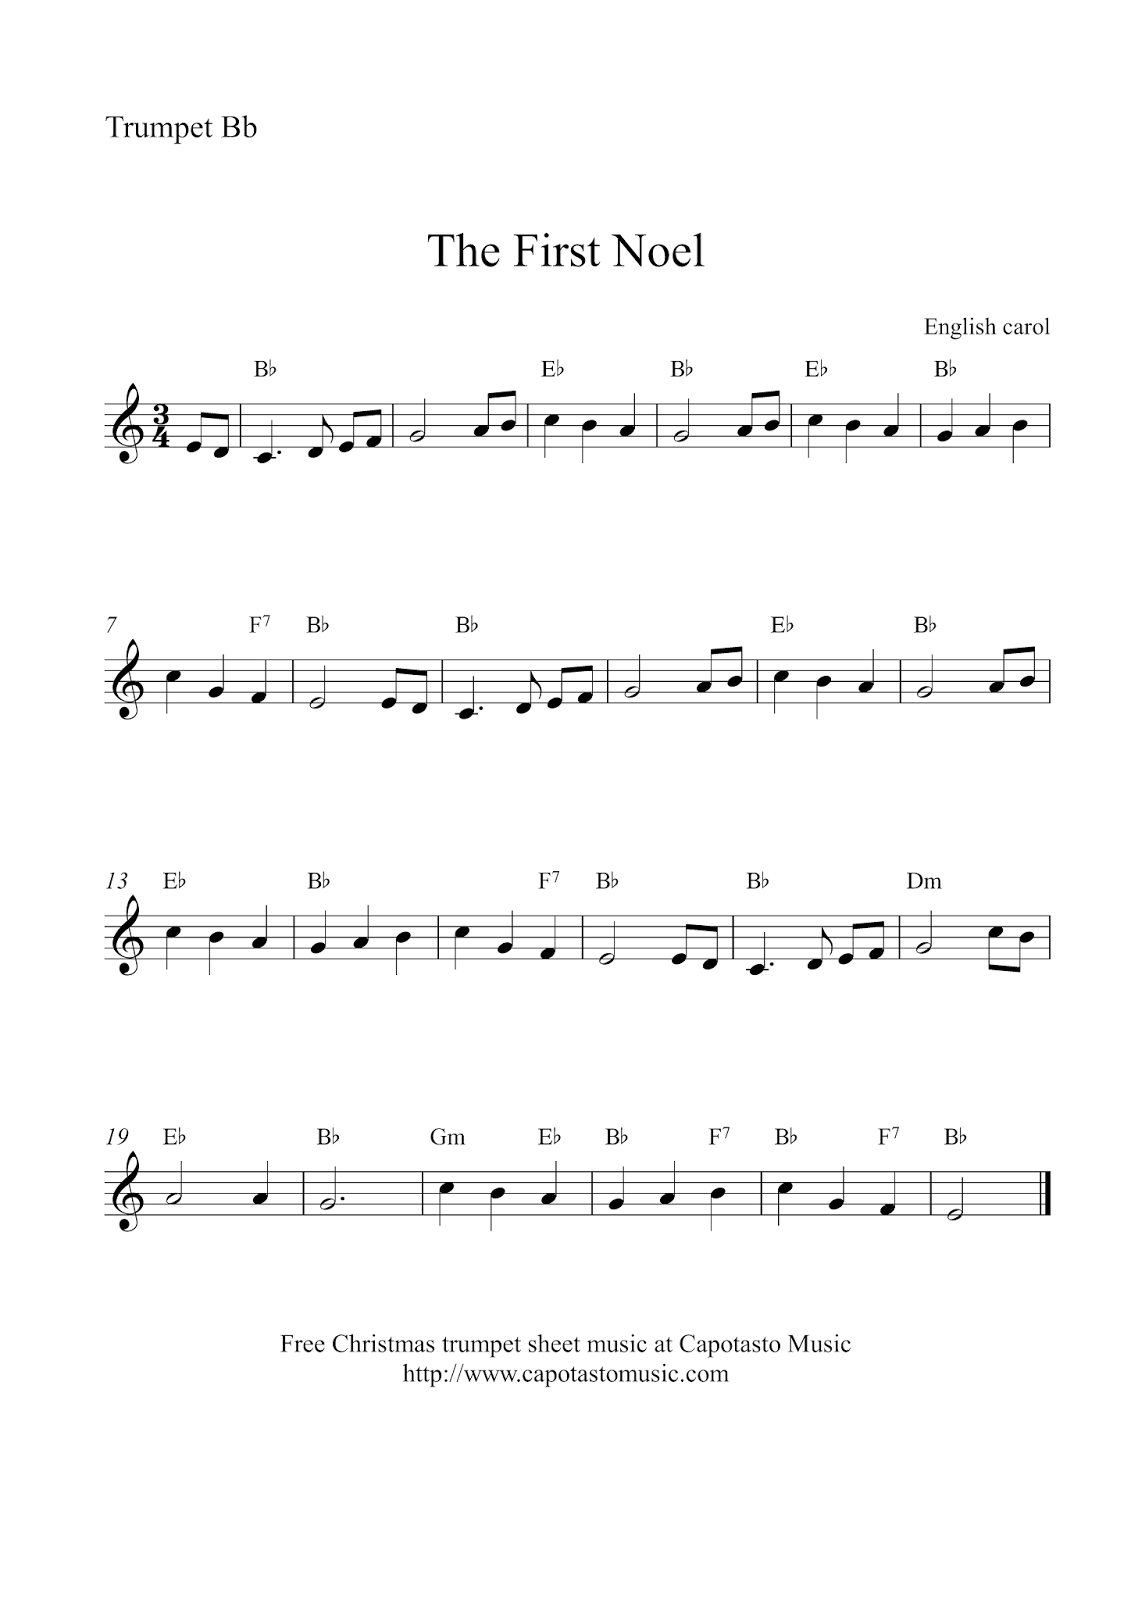 easy-sheet-music-for-beginners-free-christmas-trumpet-sheet-music